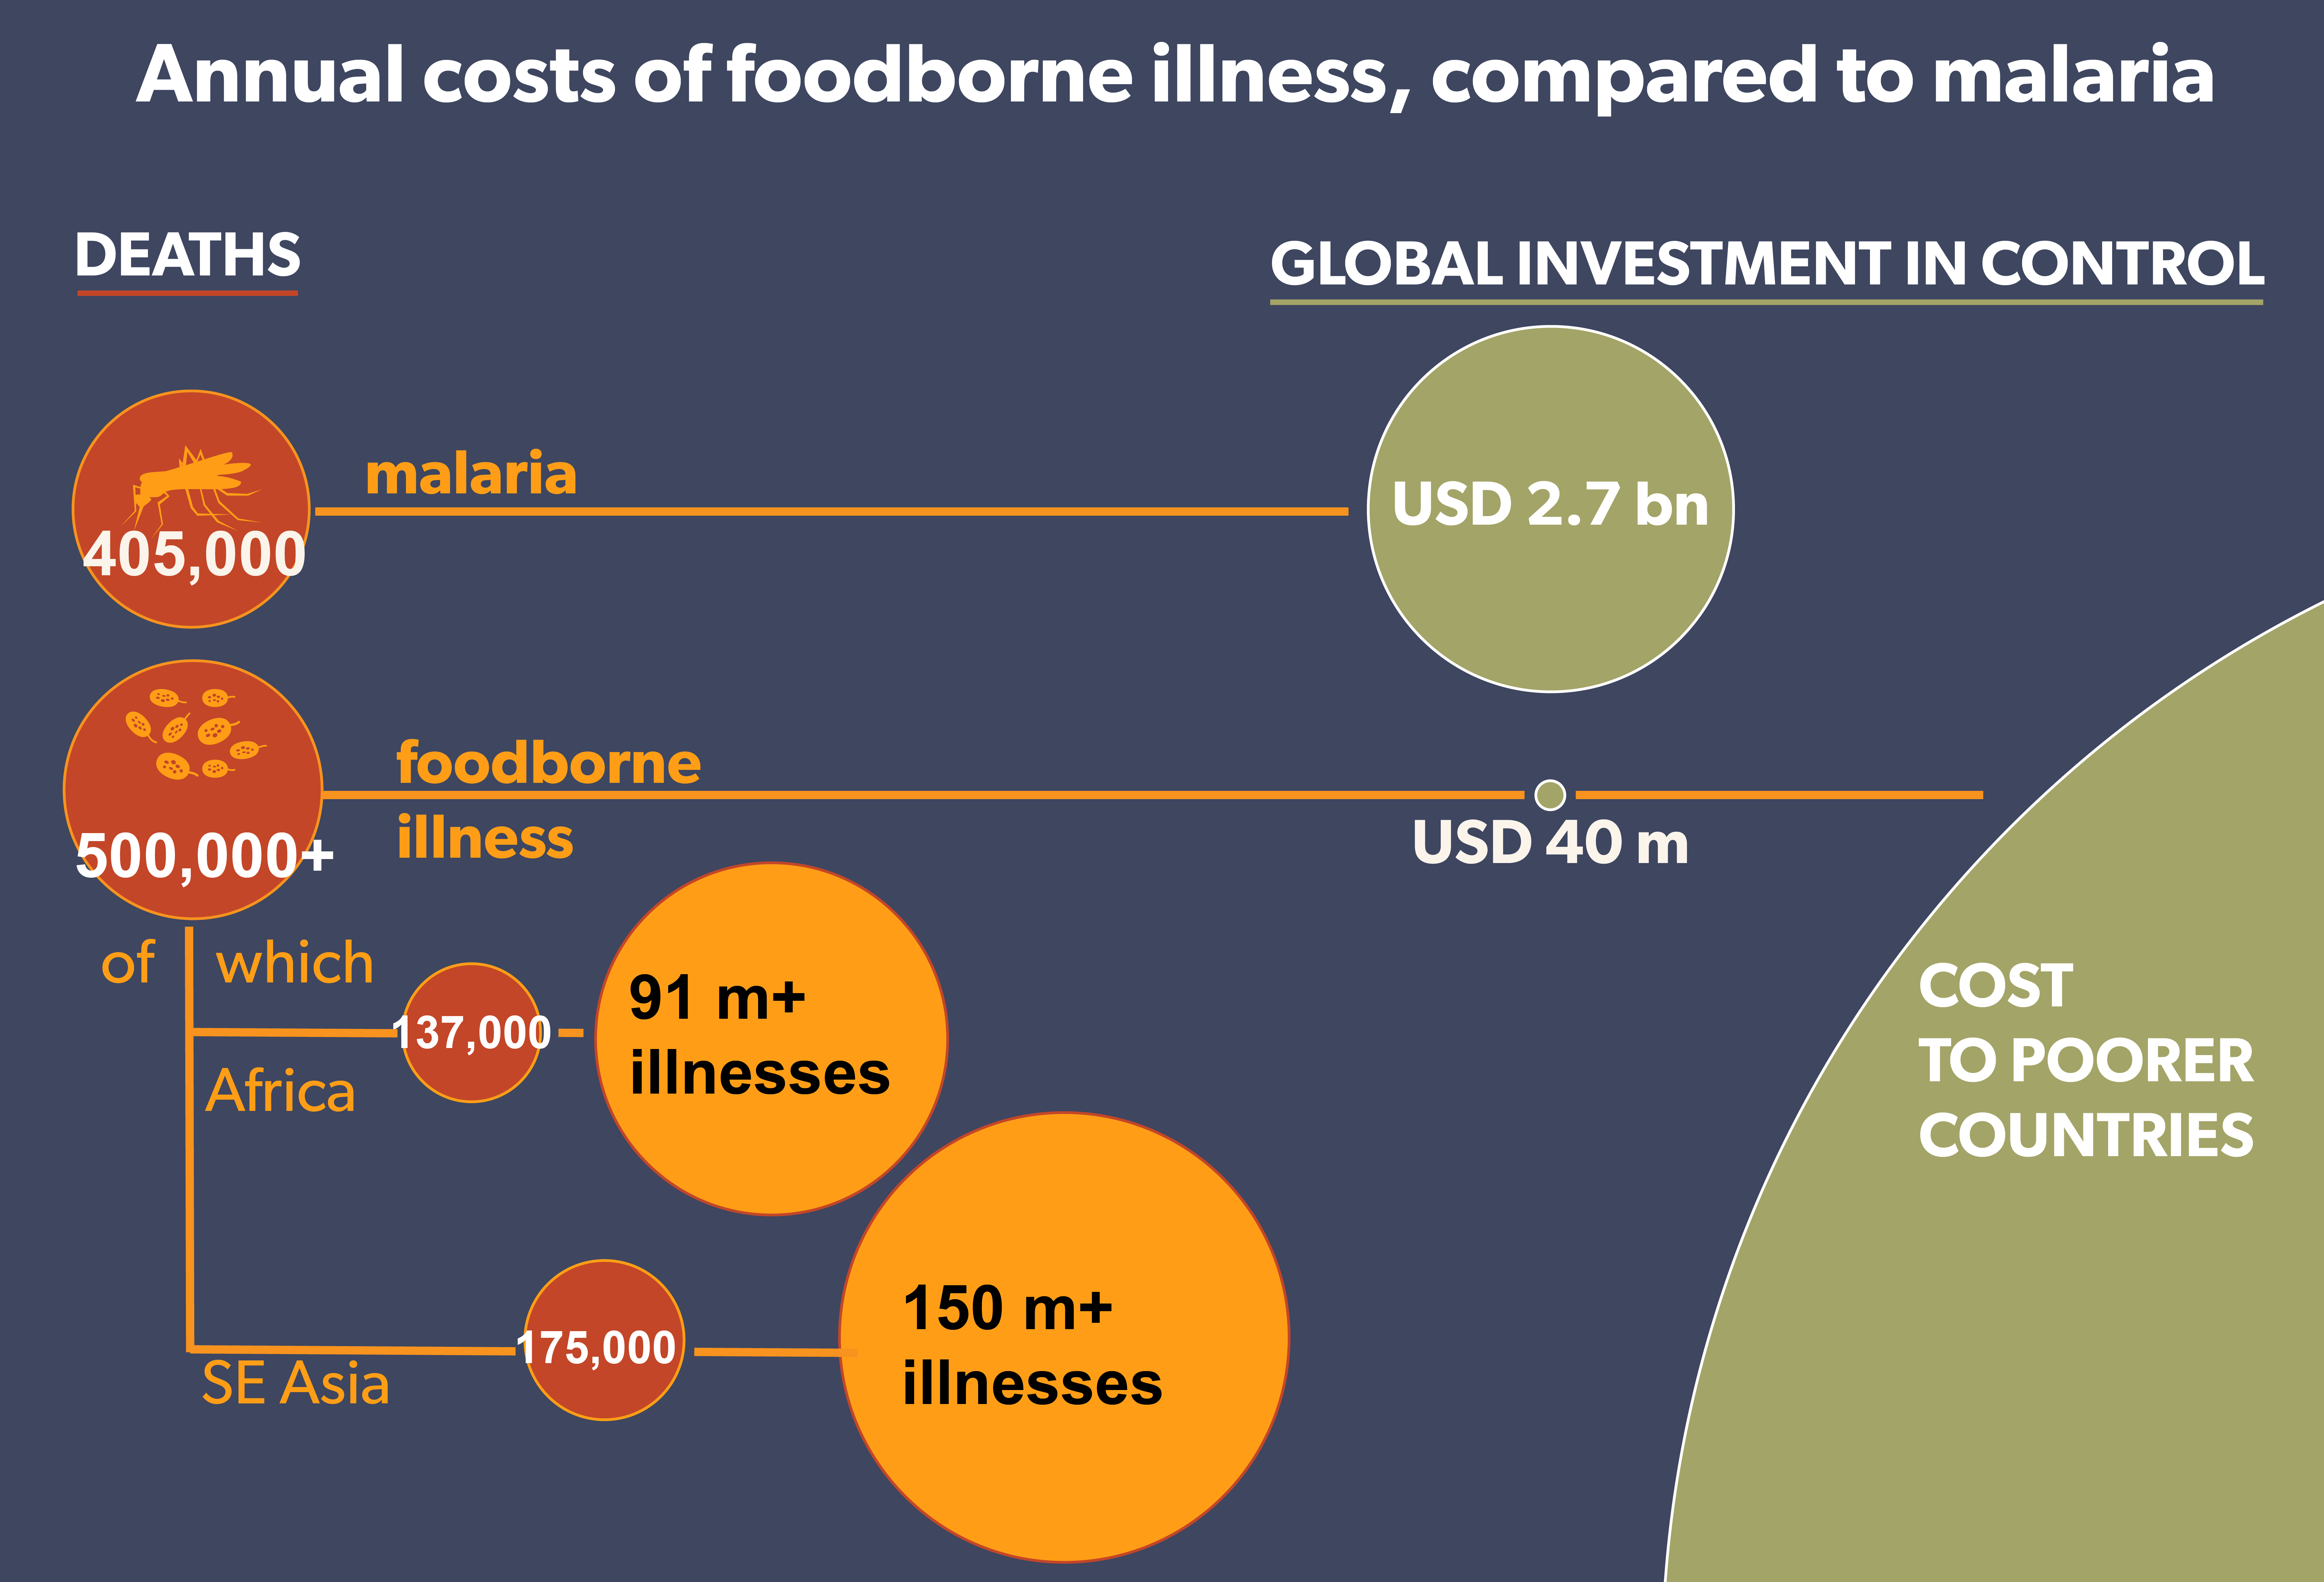 Impact of foodborne illness compared to malaria